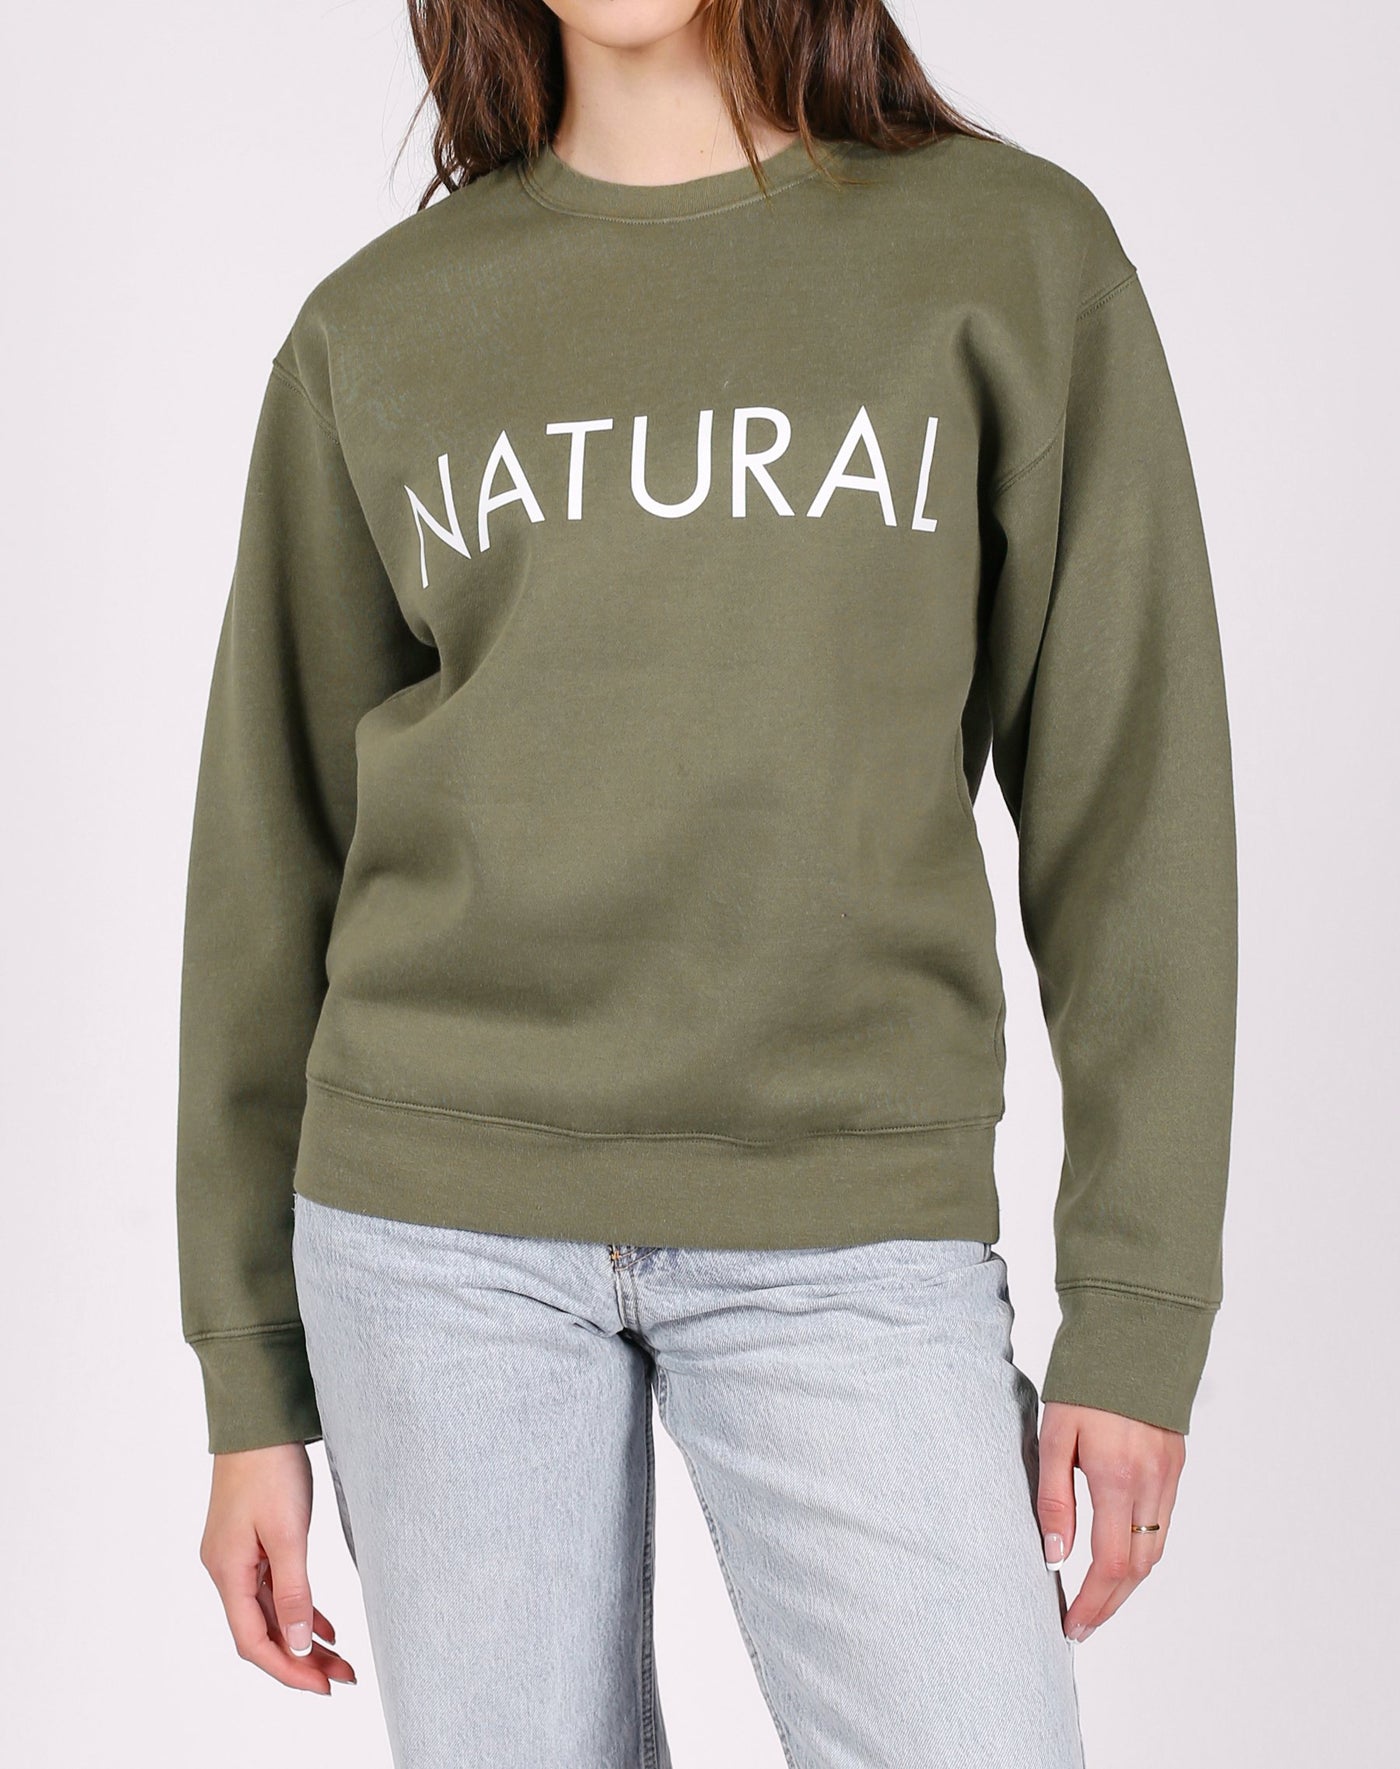 The "NATURAL" Classic Crew Neck Sweatshirt | Olive